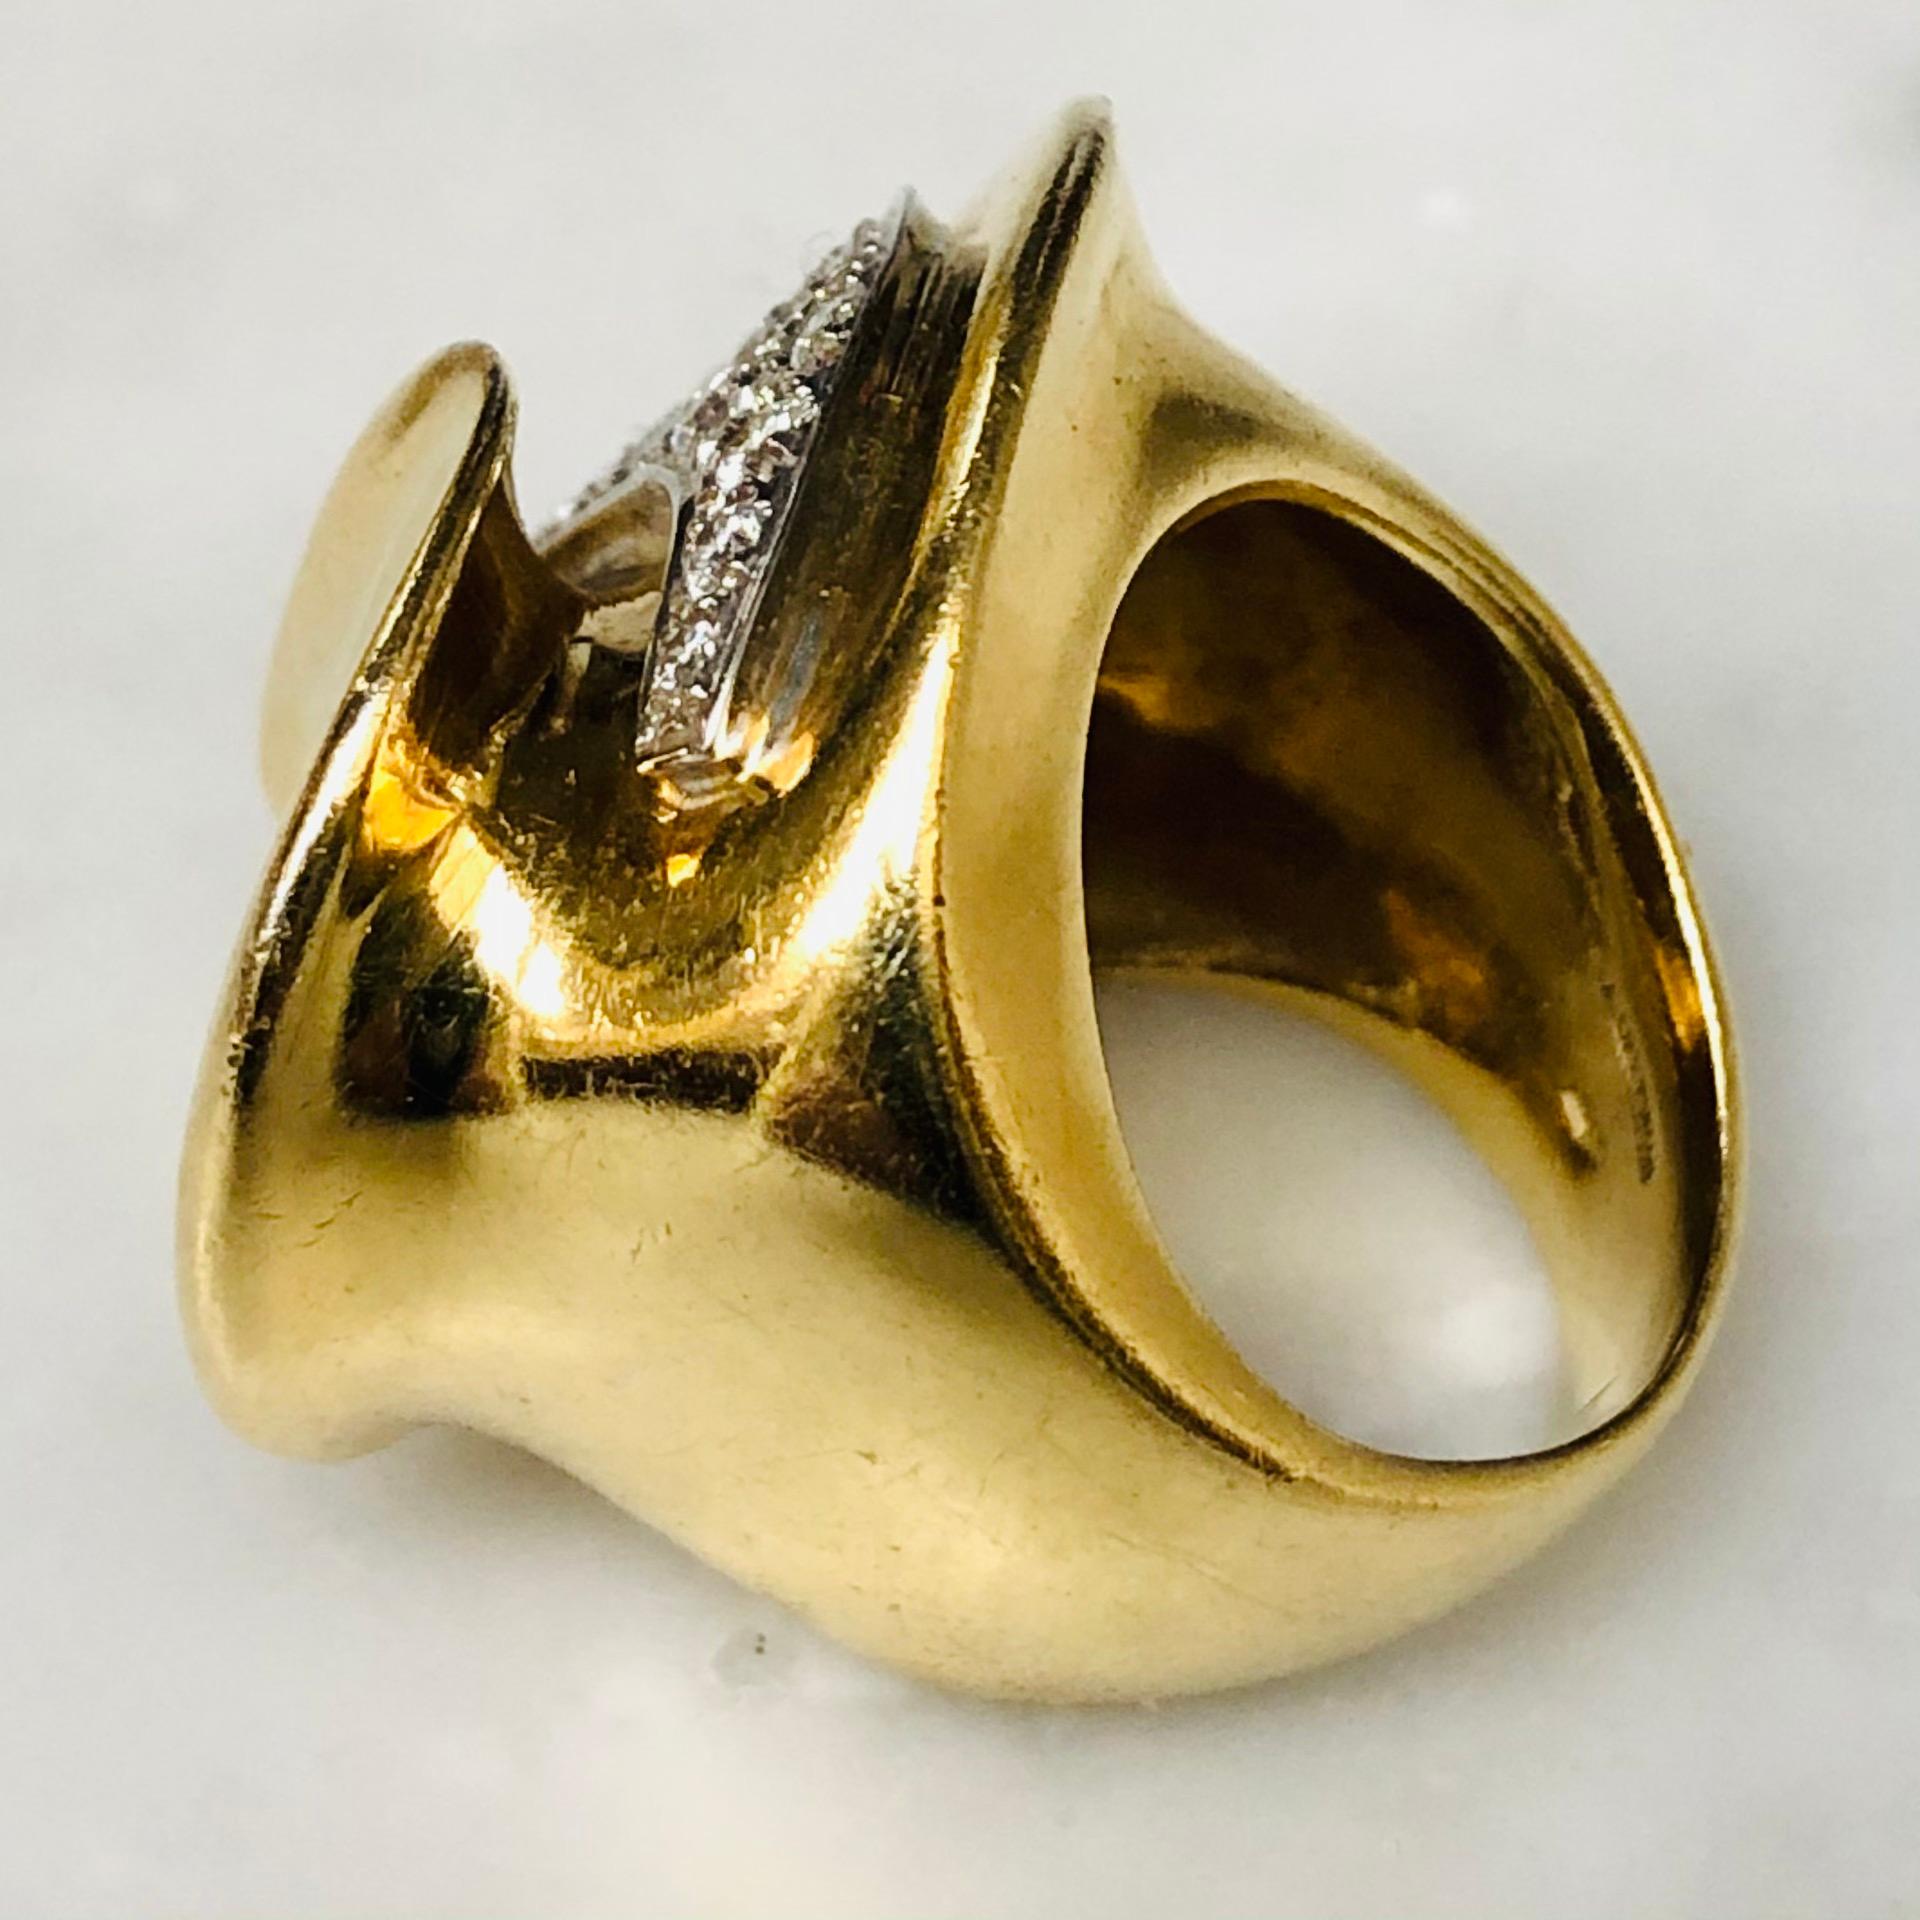 Contemporary Gold and Diamond Sculptural Cocktail Ring, 18 Karat Yellow Gold